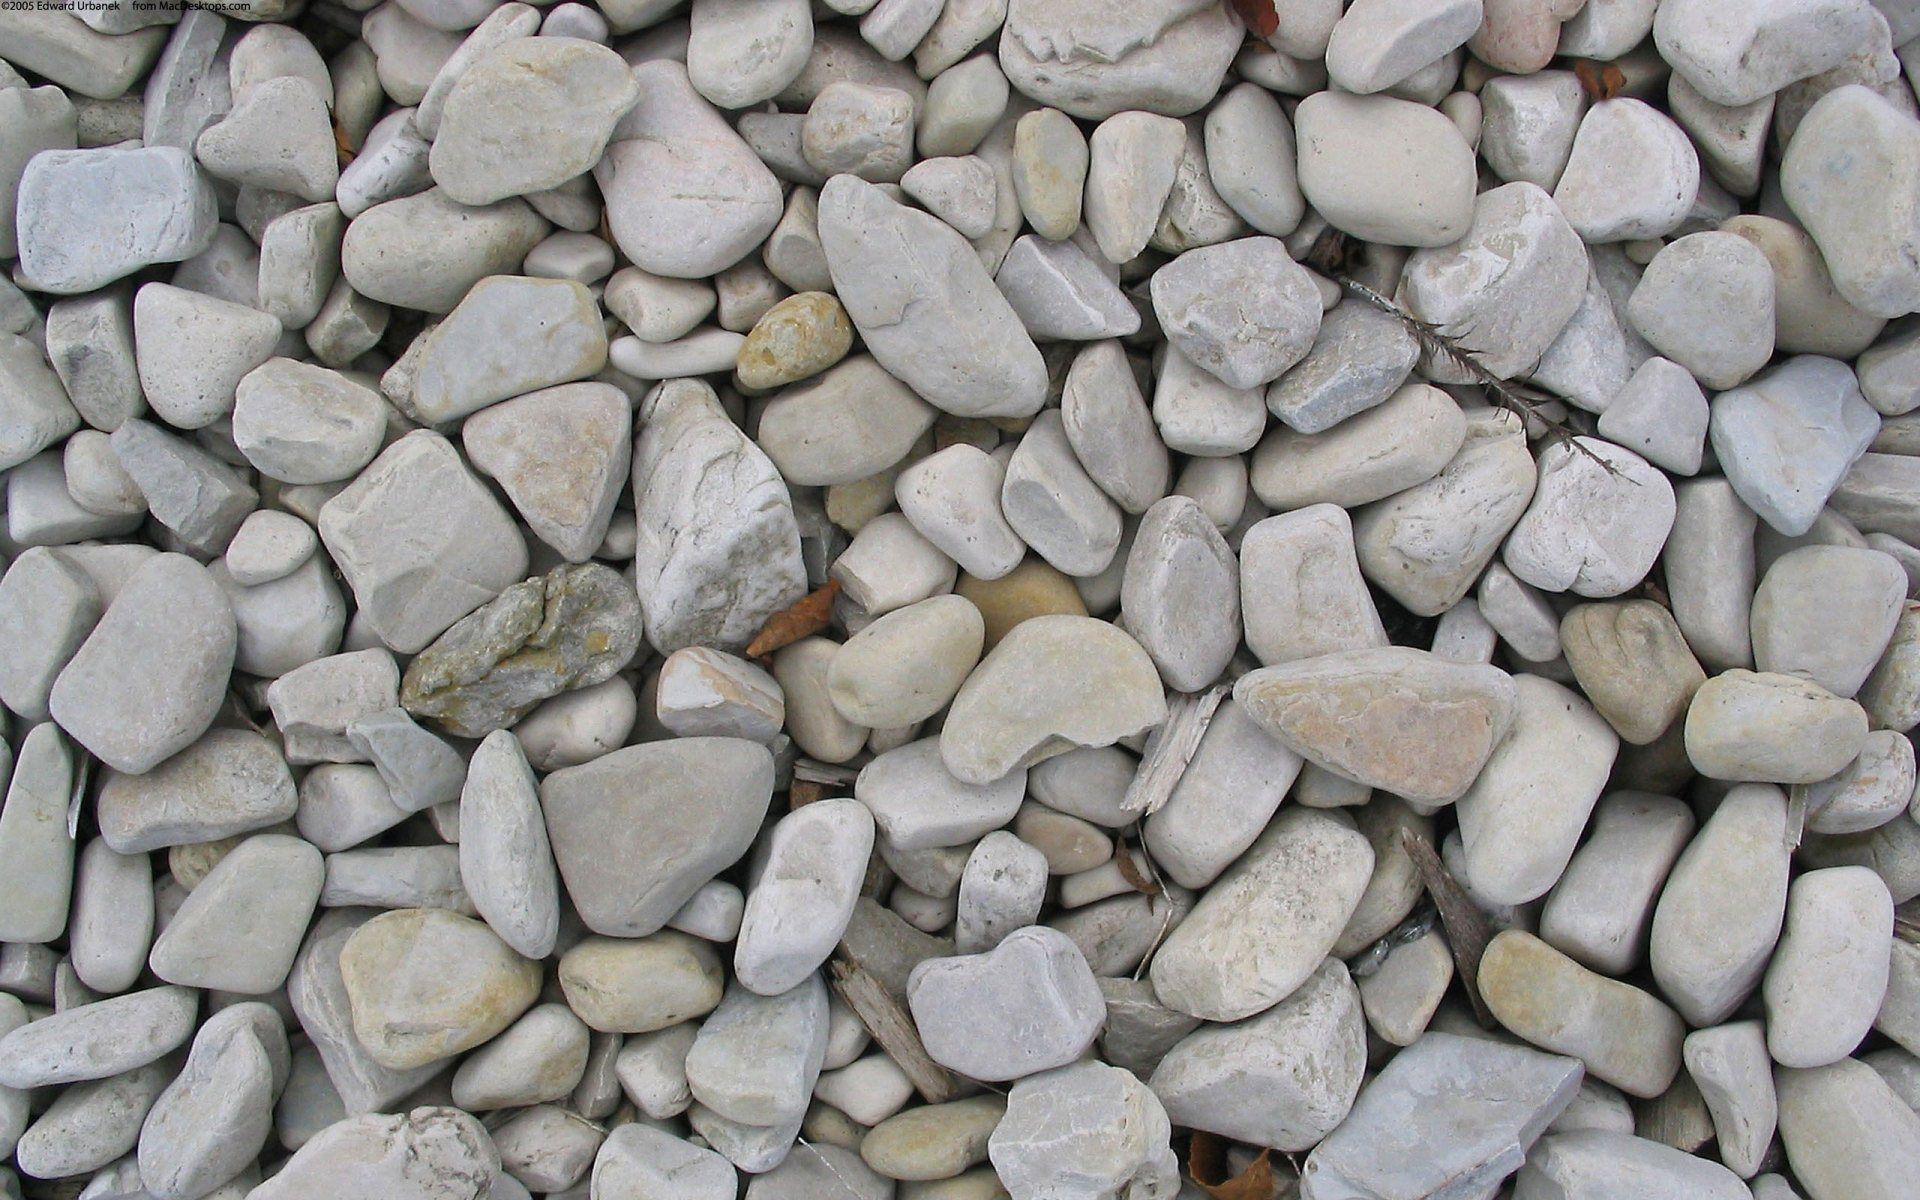 Small Stones